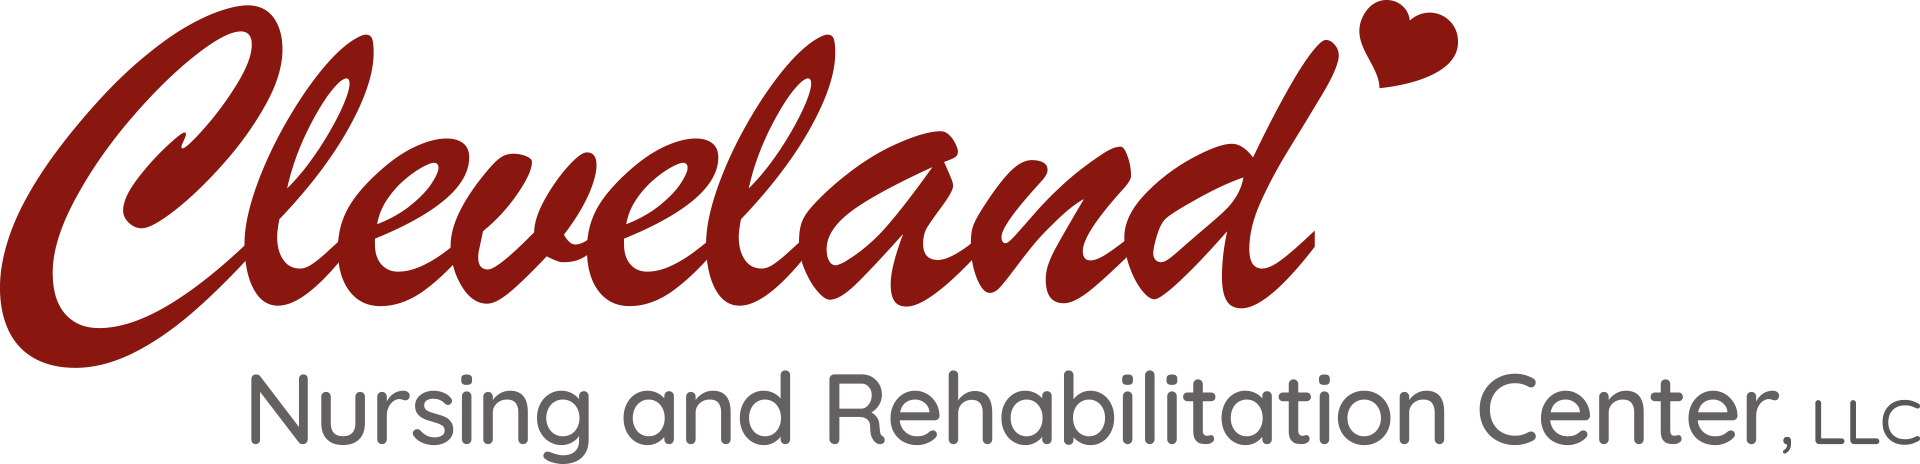 Cleveland Nursing and Rehabilitation Center